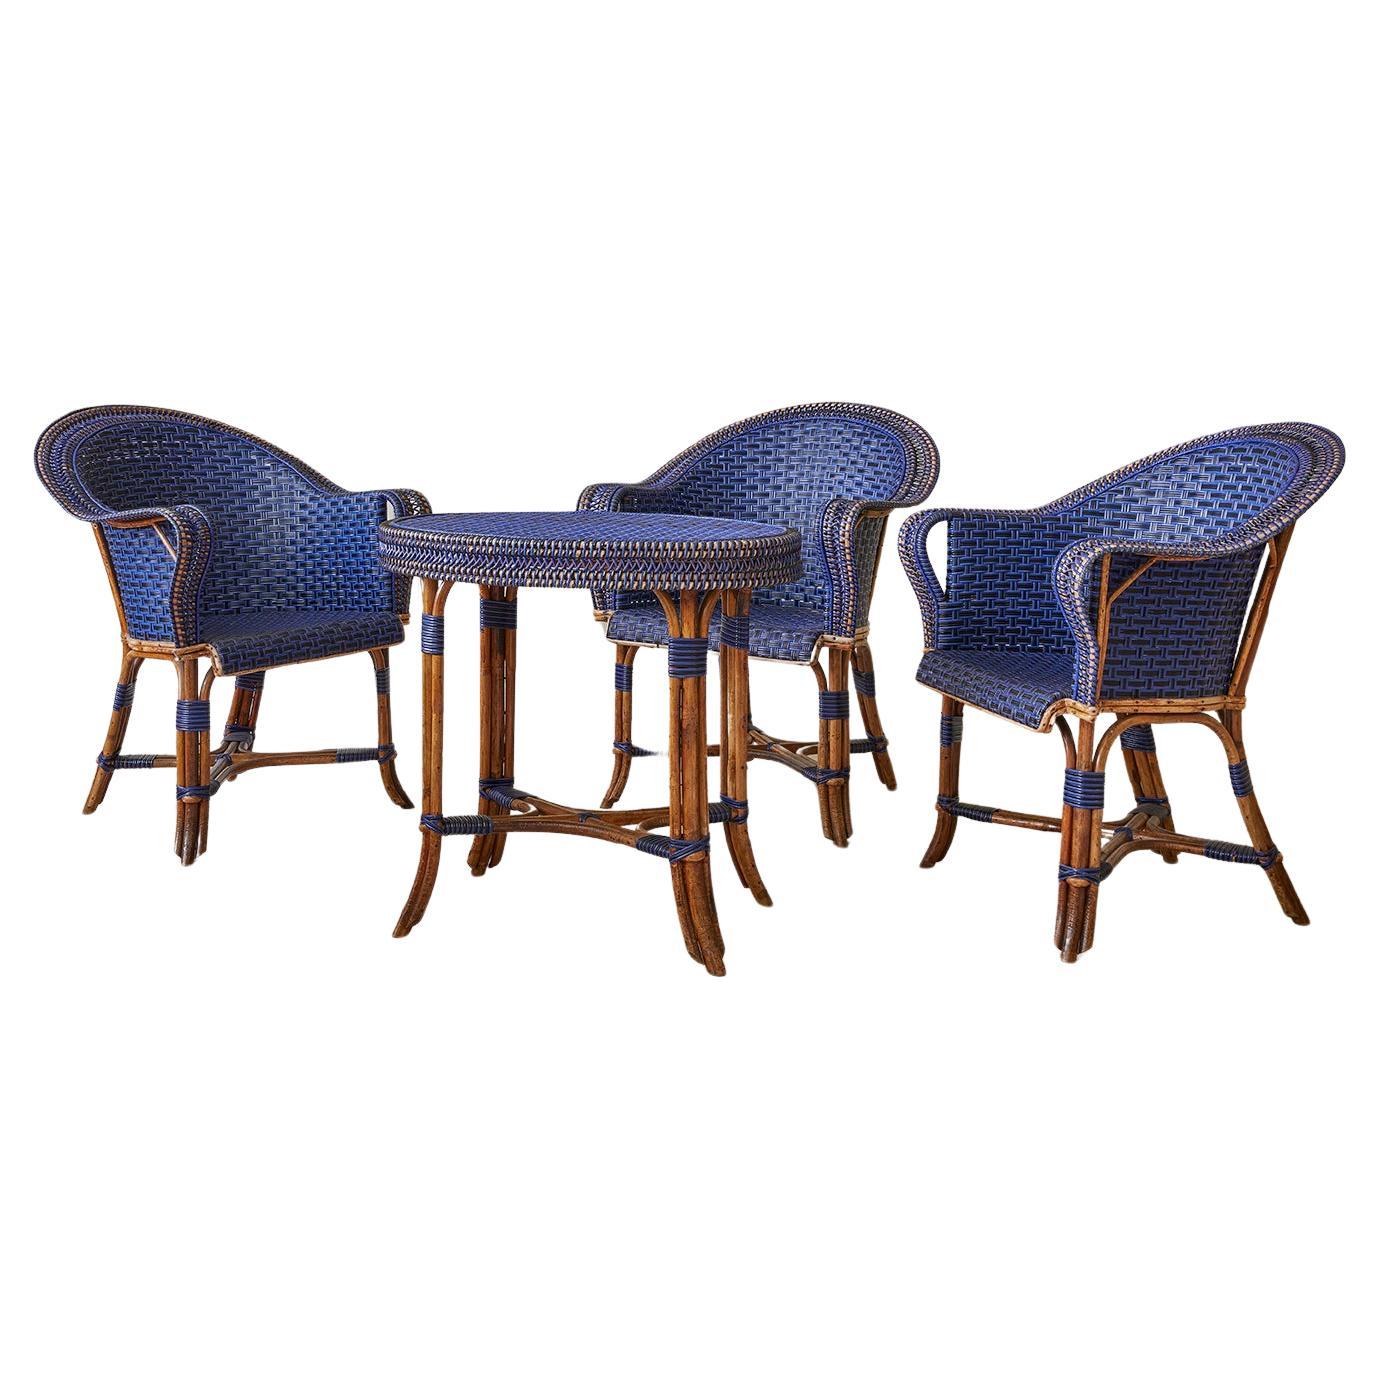 Vintage Complete Rattan Furniture Set in Black and Blue, France, 20th Century For Sale